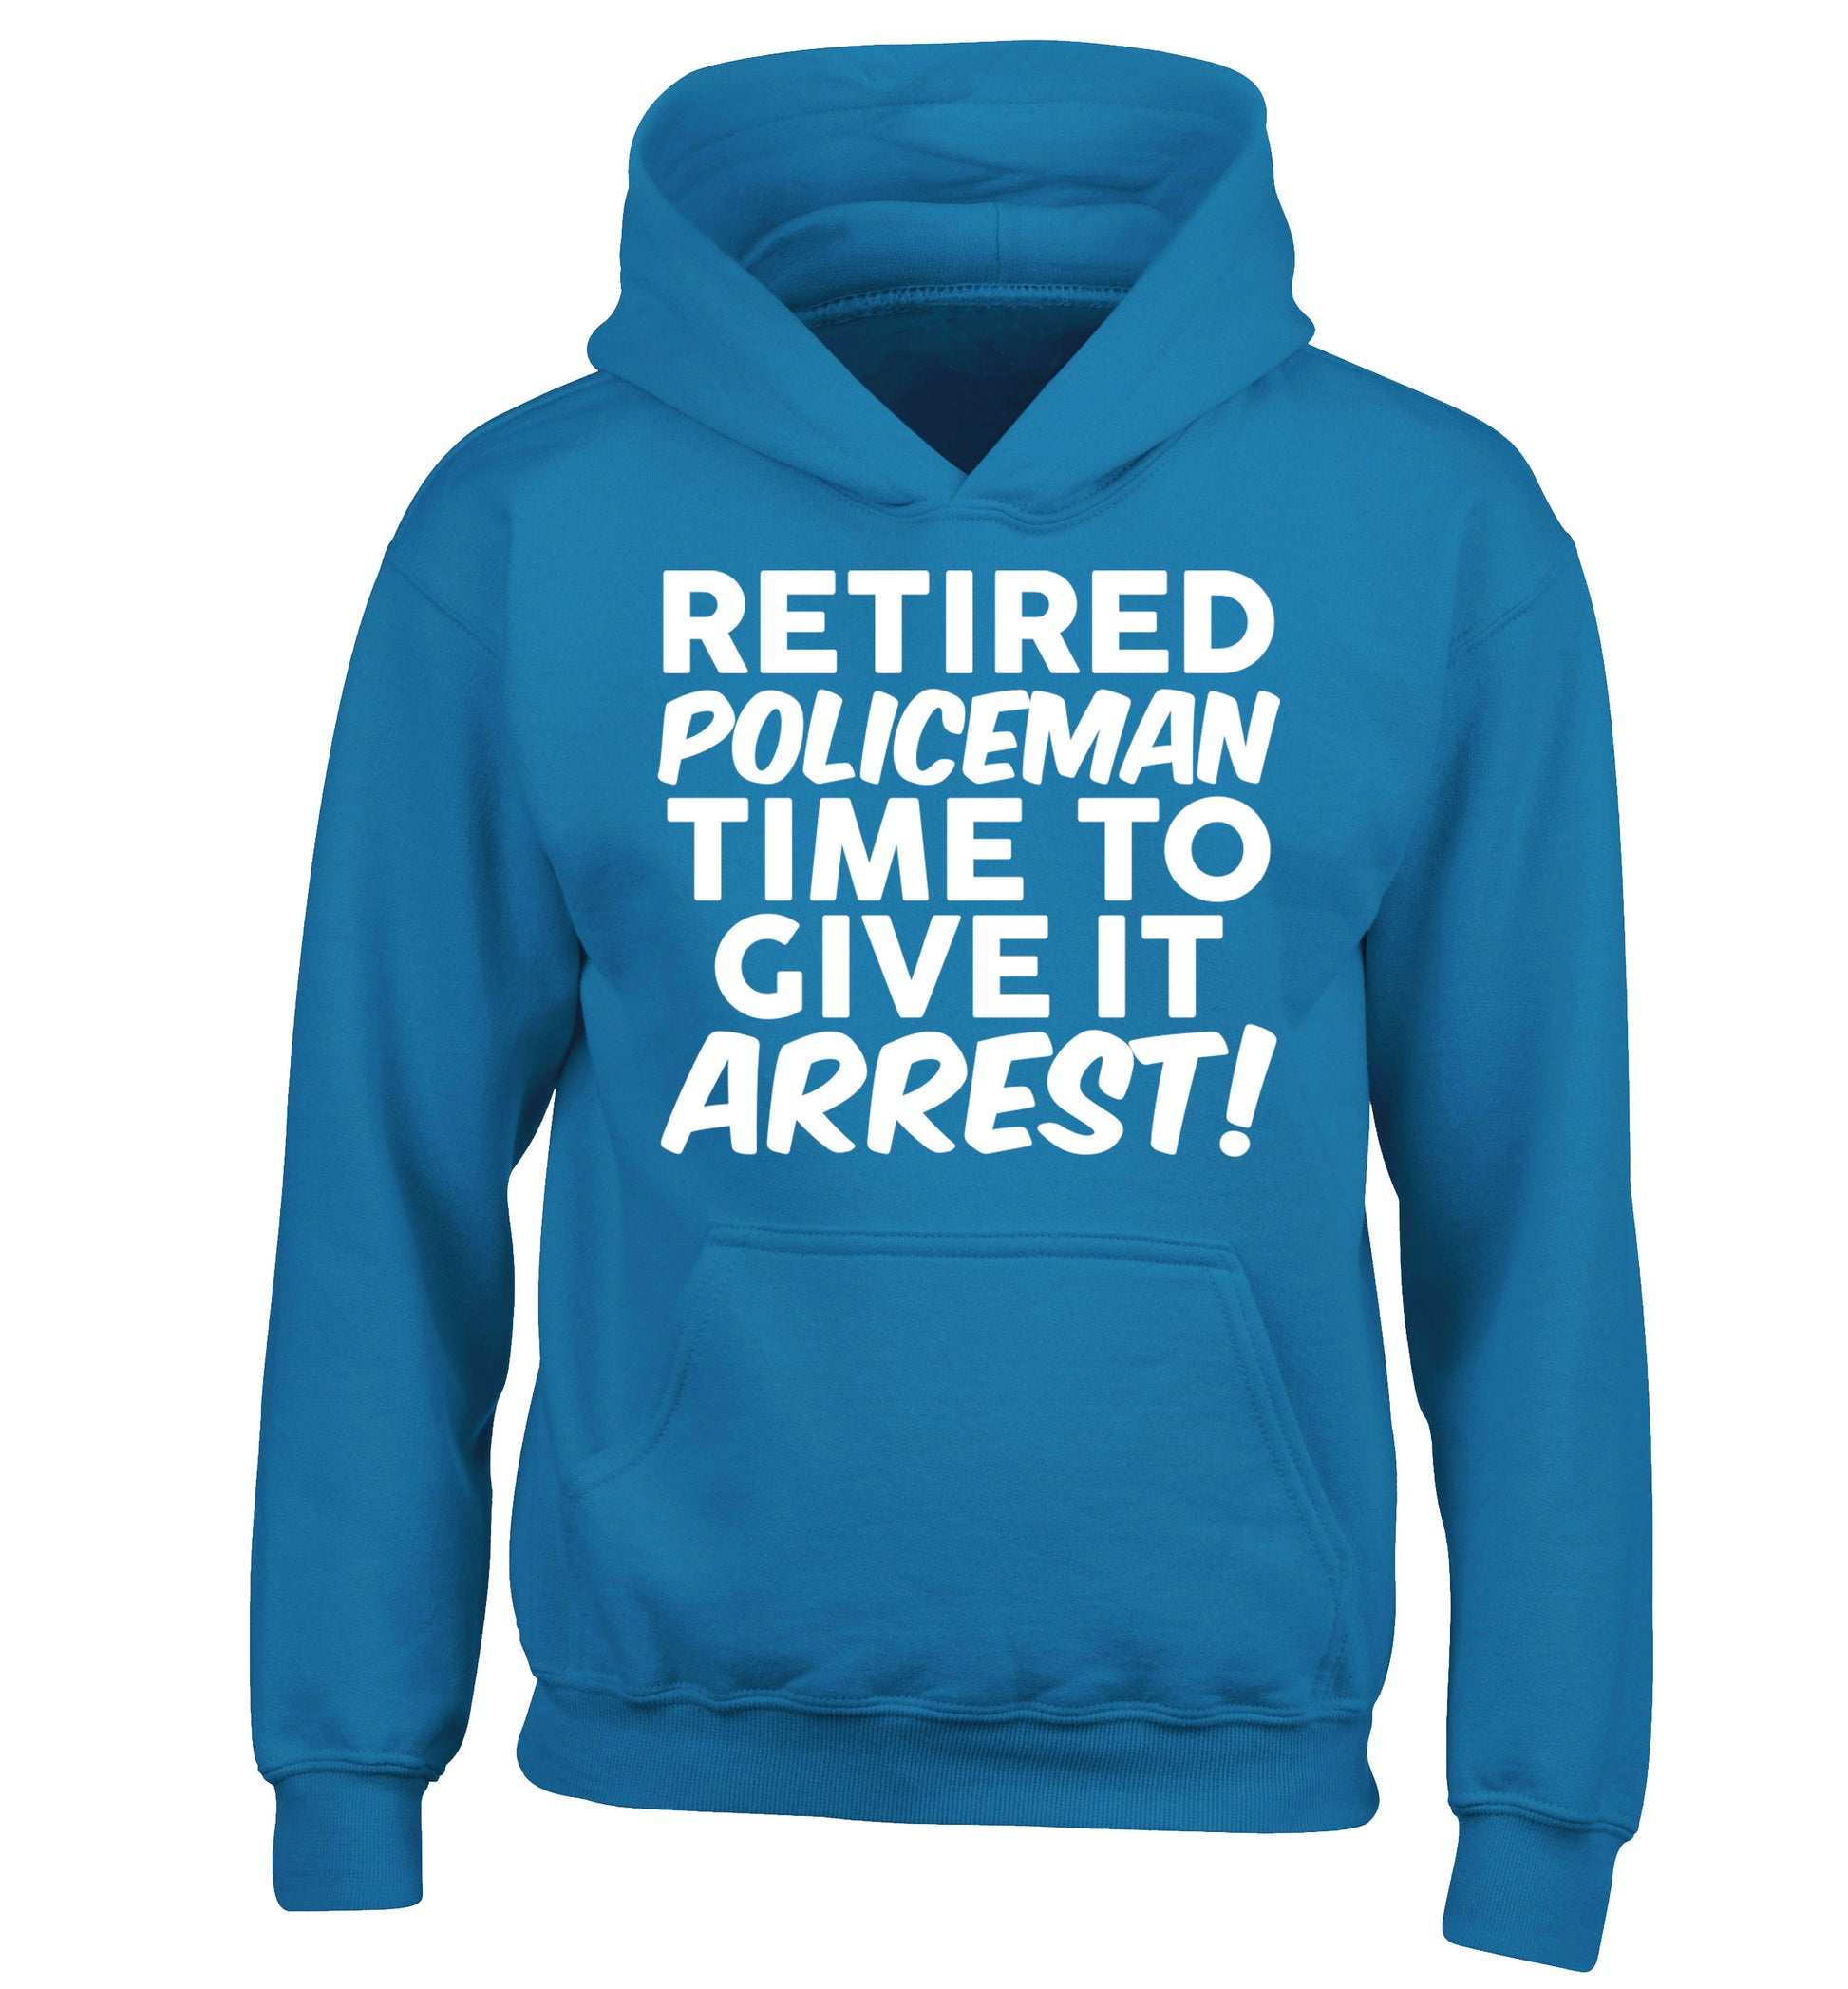 Retired policeman give it arresst! children's blue hoodie 12-13 Years